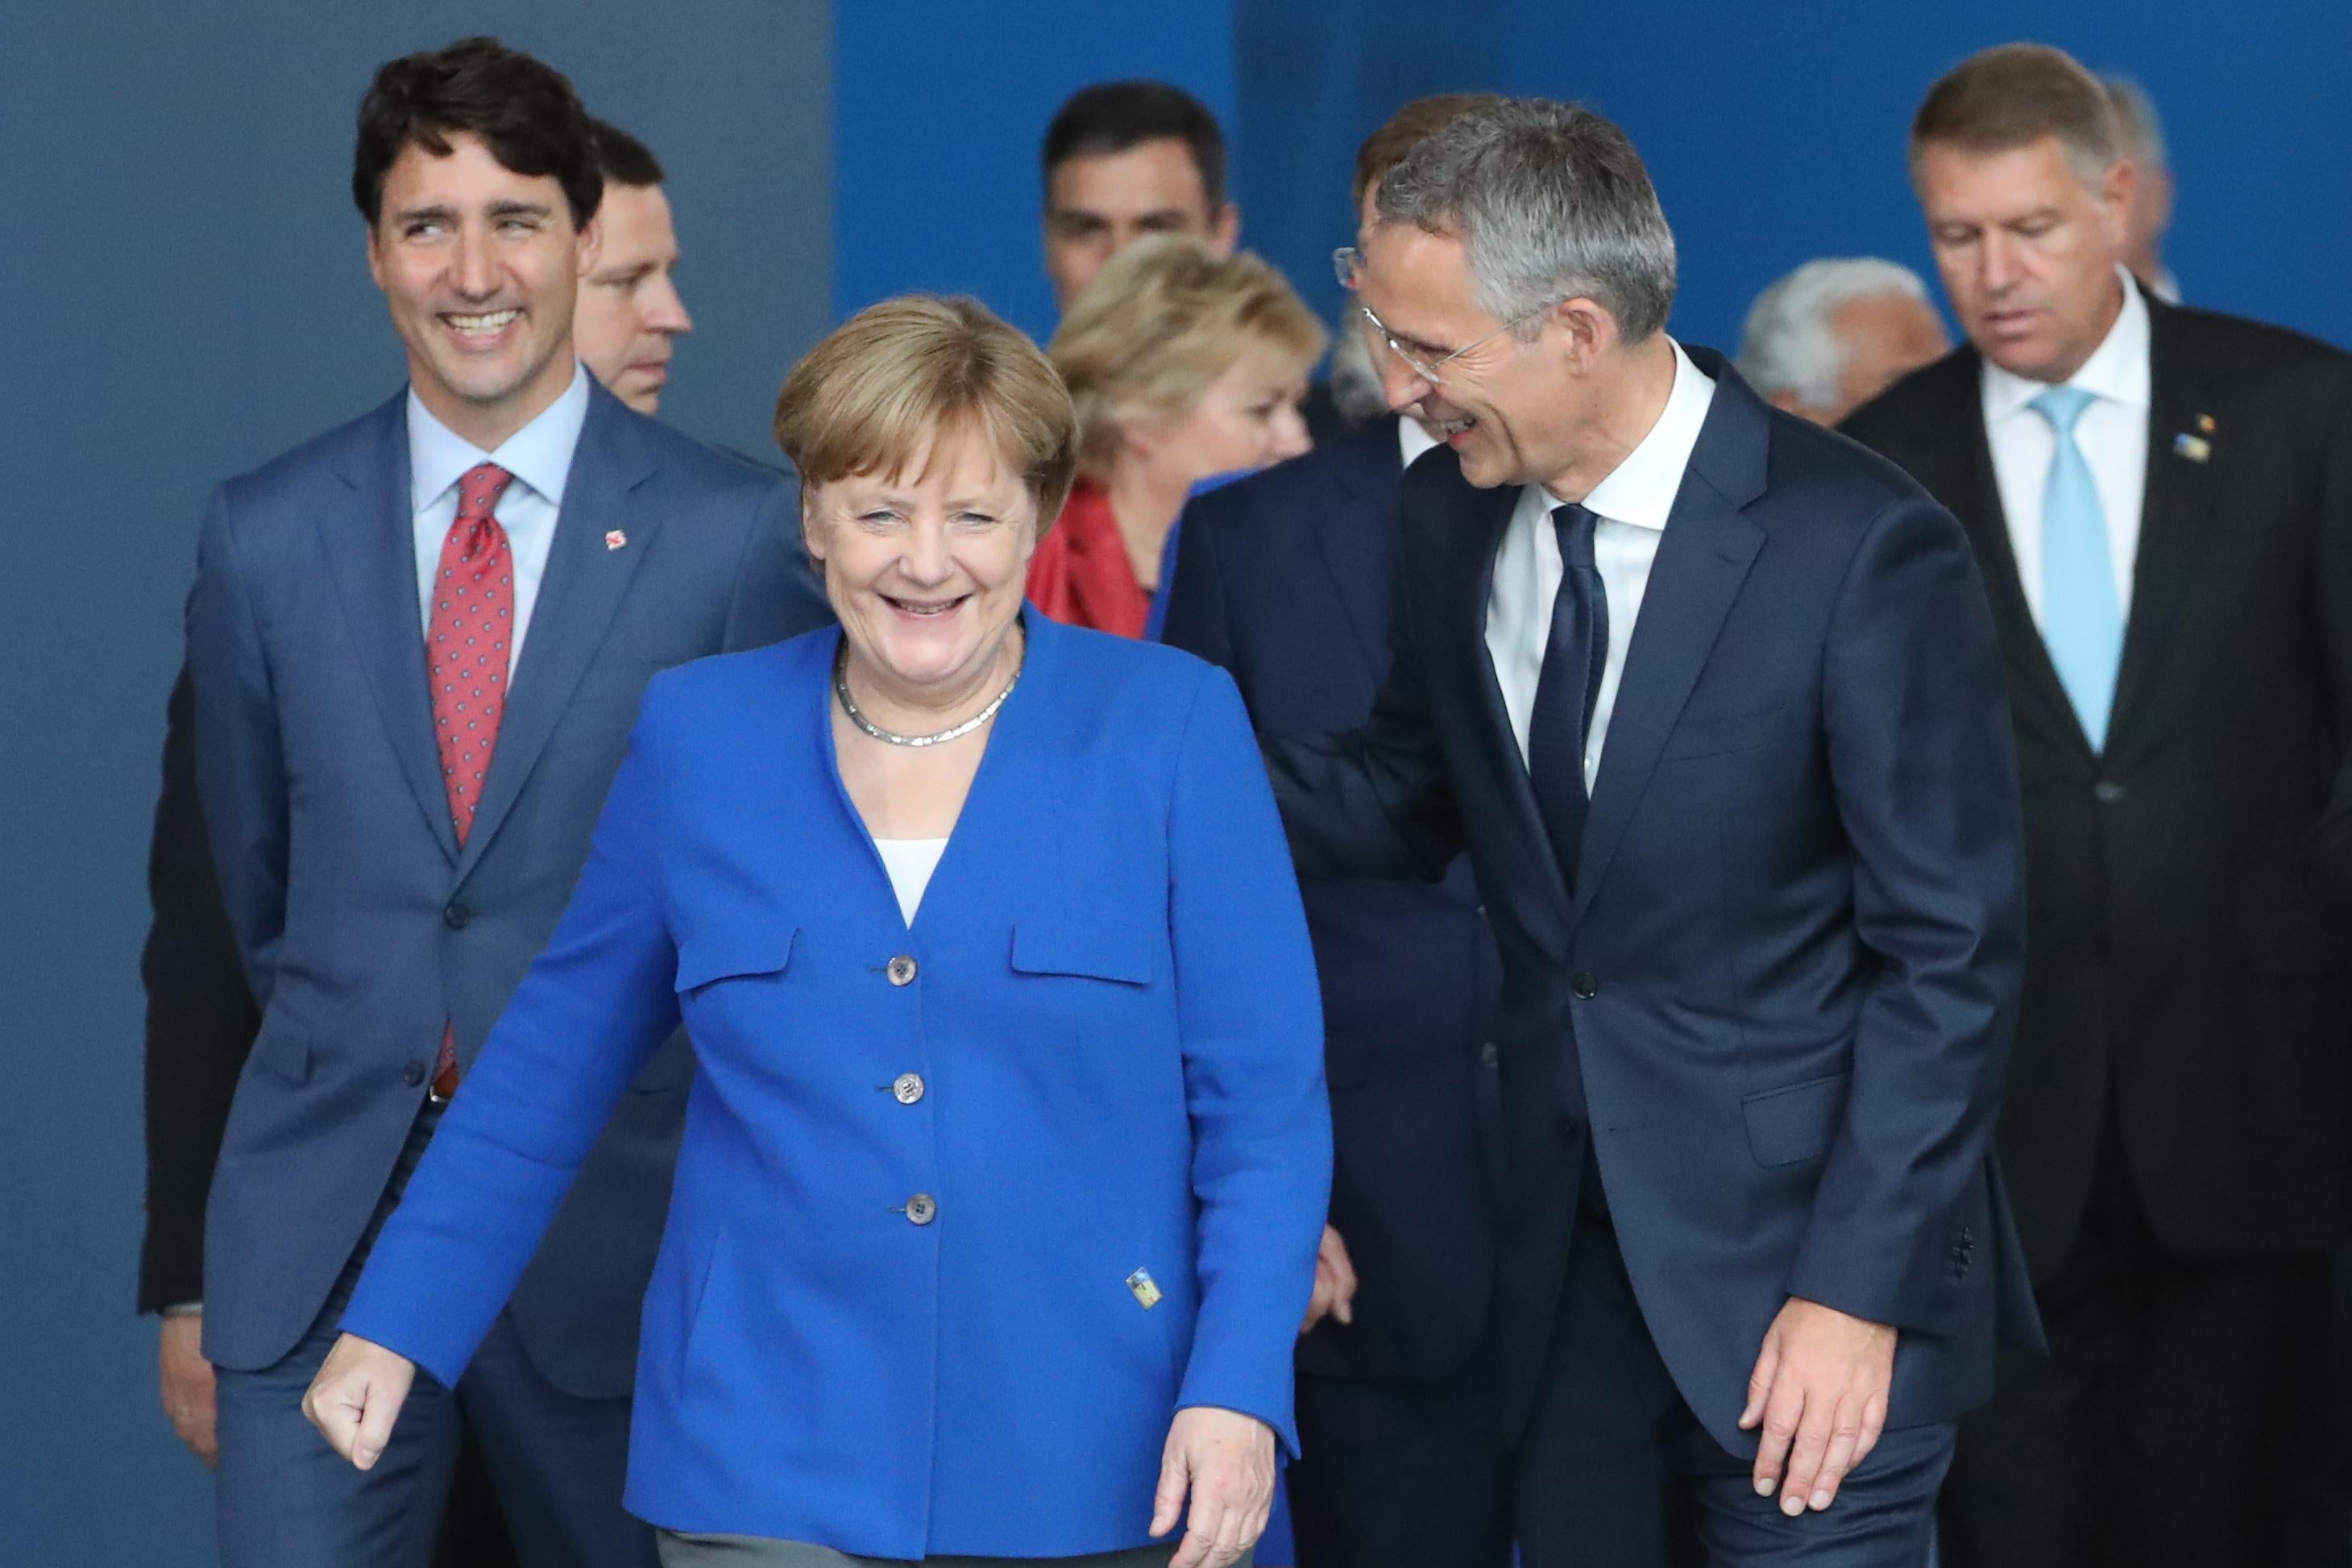 Angela Merkel and other world leaders walk toward the camera.